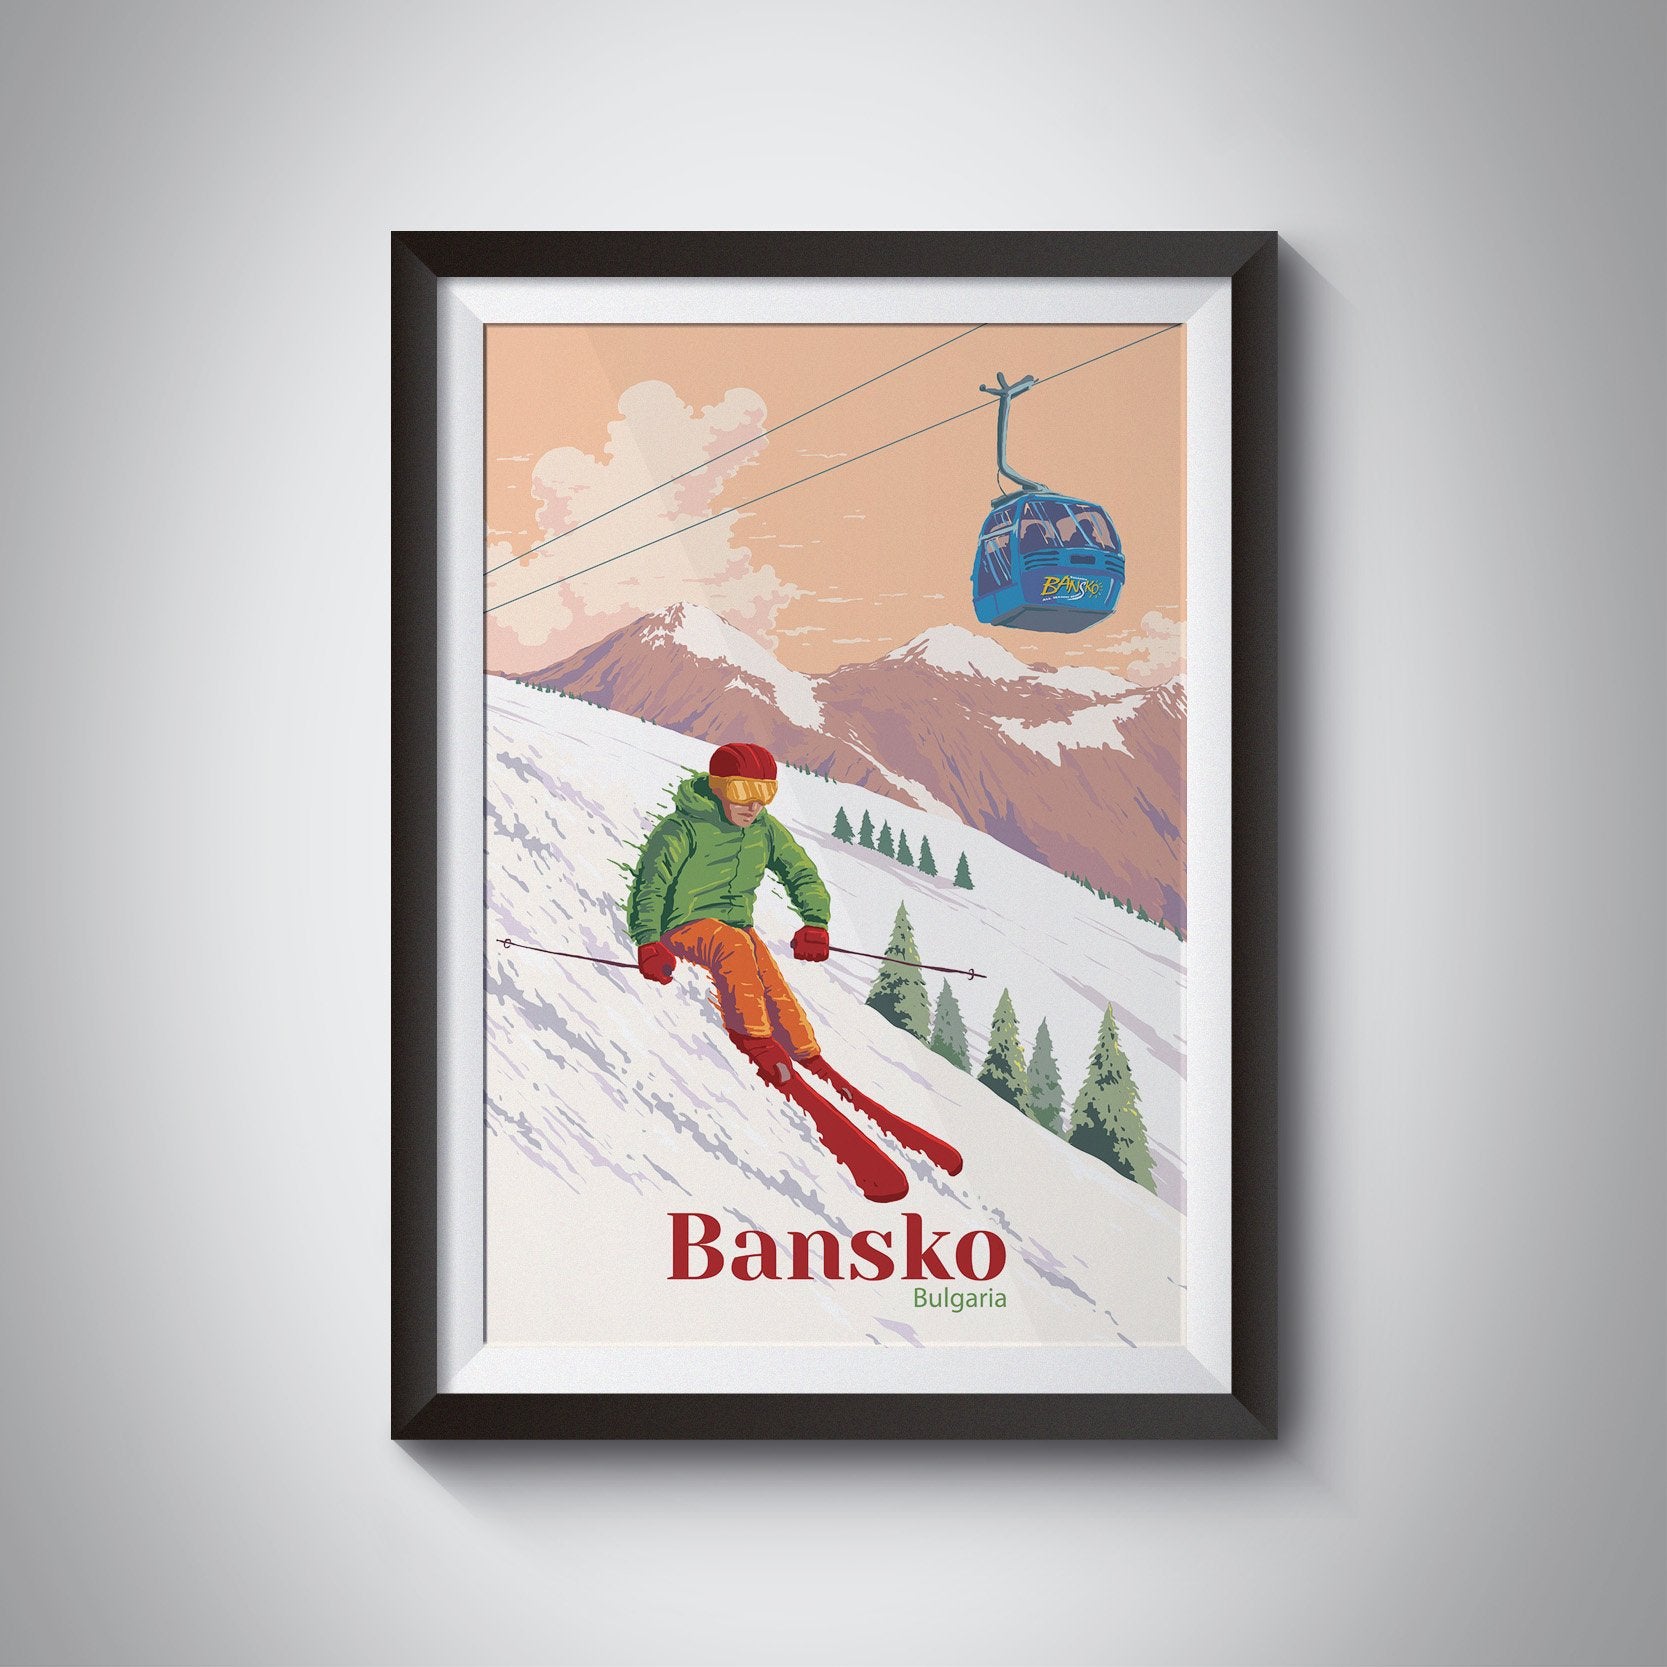 Bansko Bulgaria Ski Resort Travel Poster